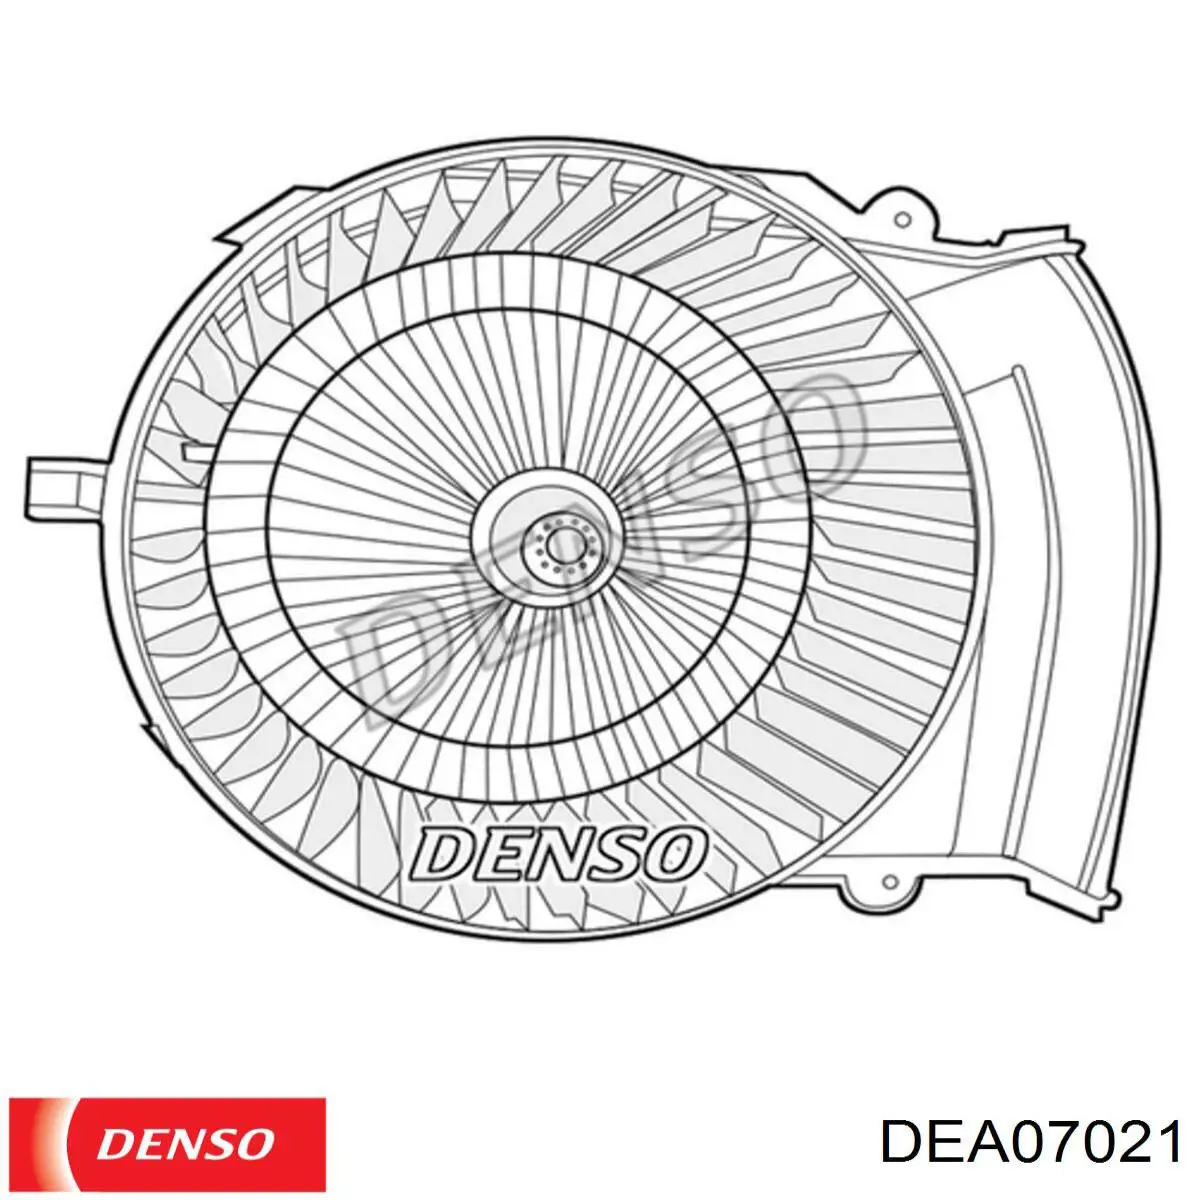 DEA07021 Denso вентилятор печки